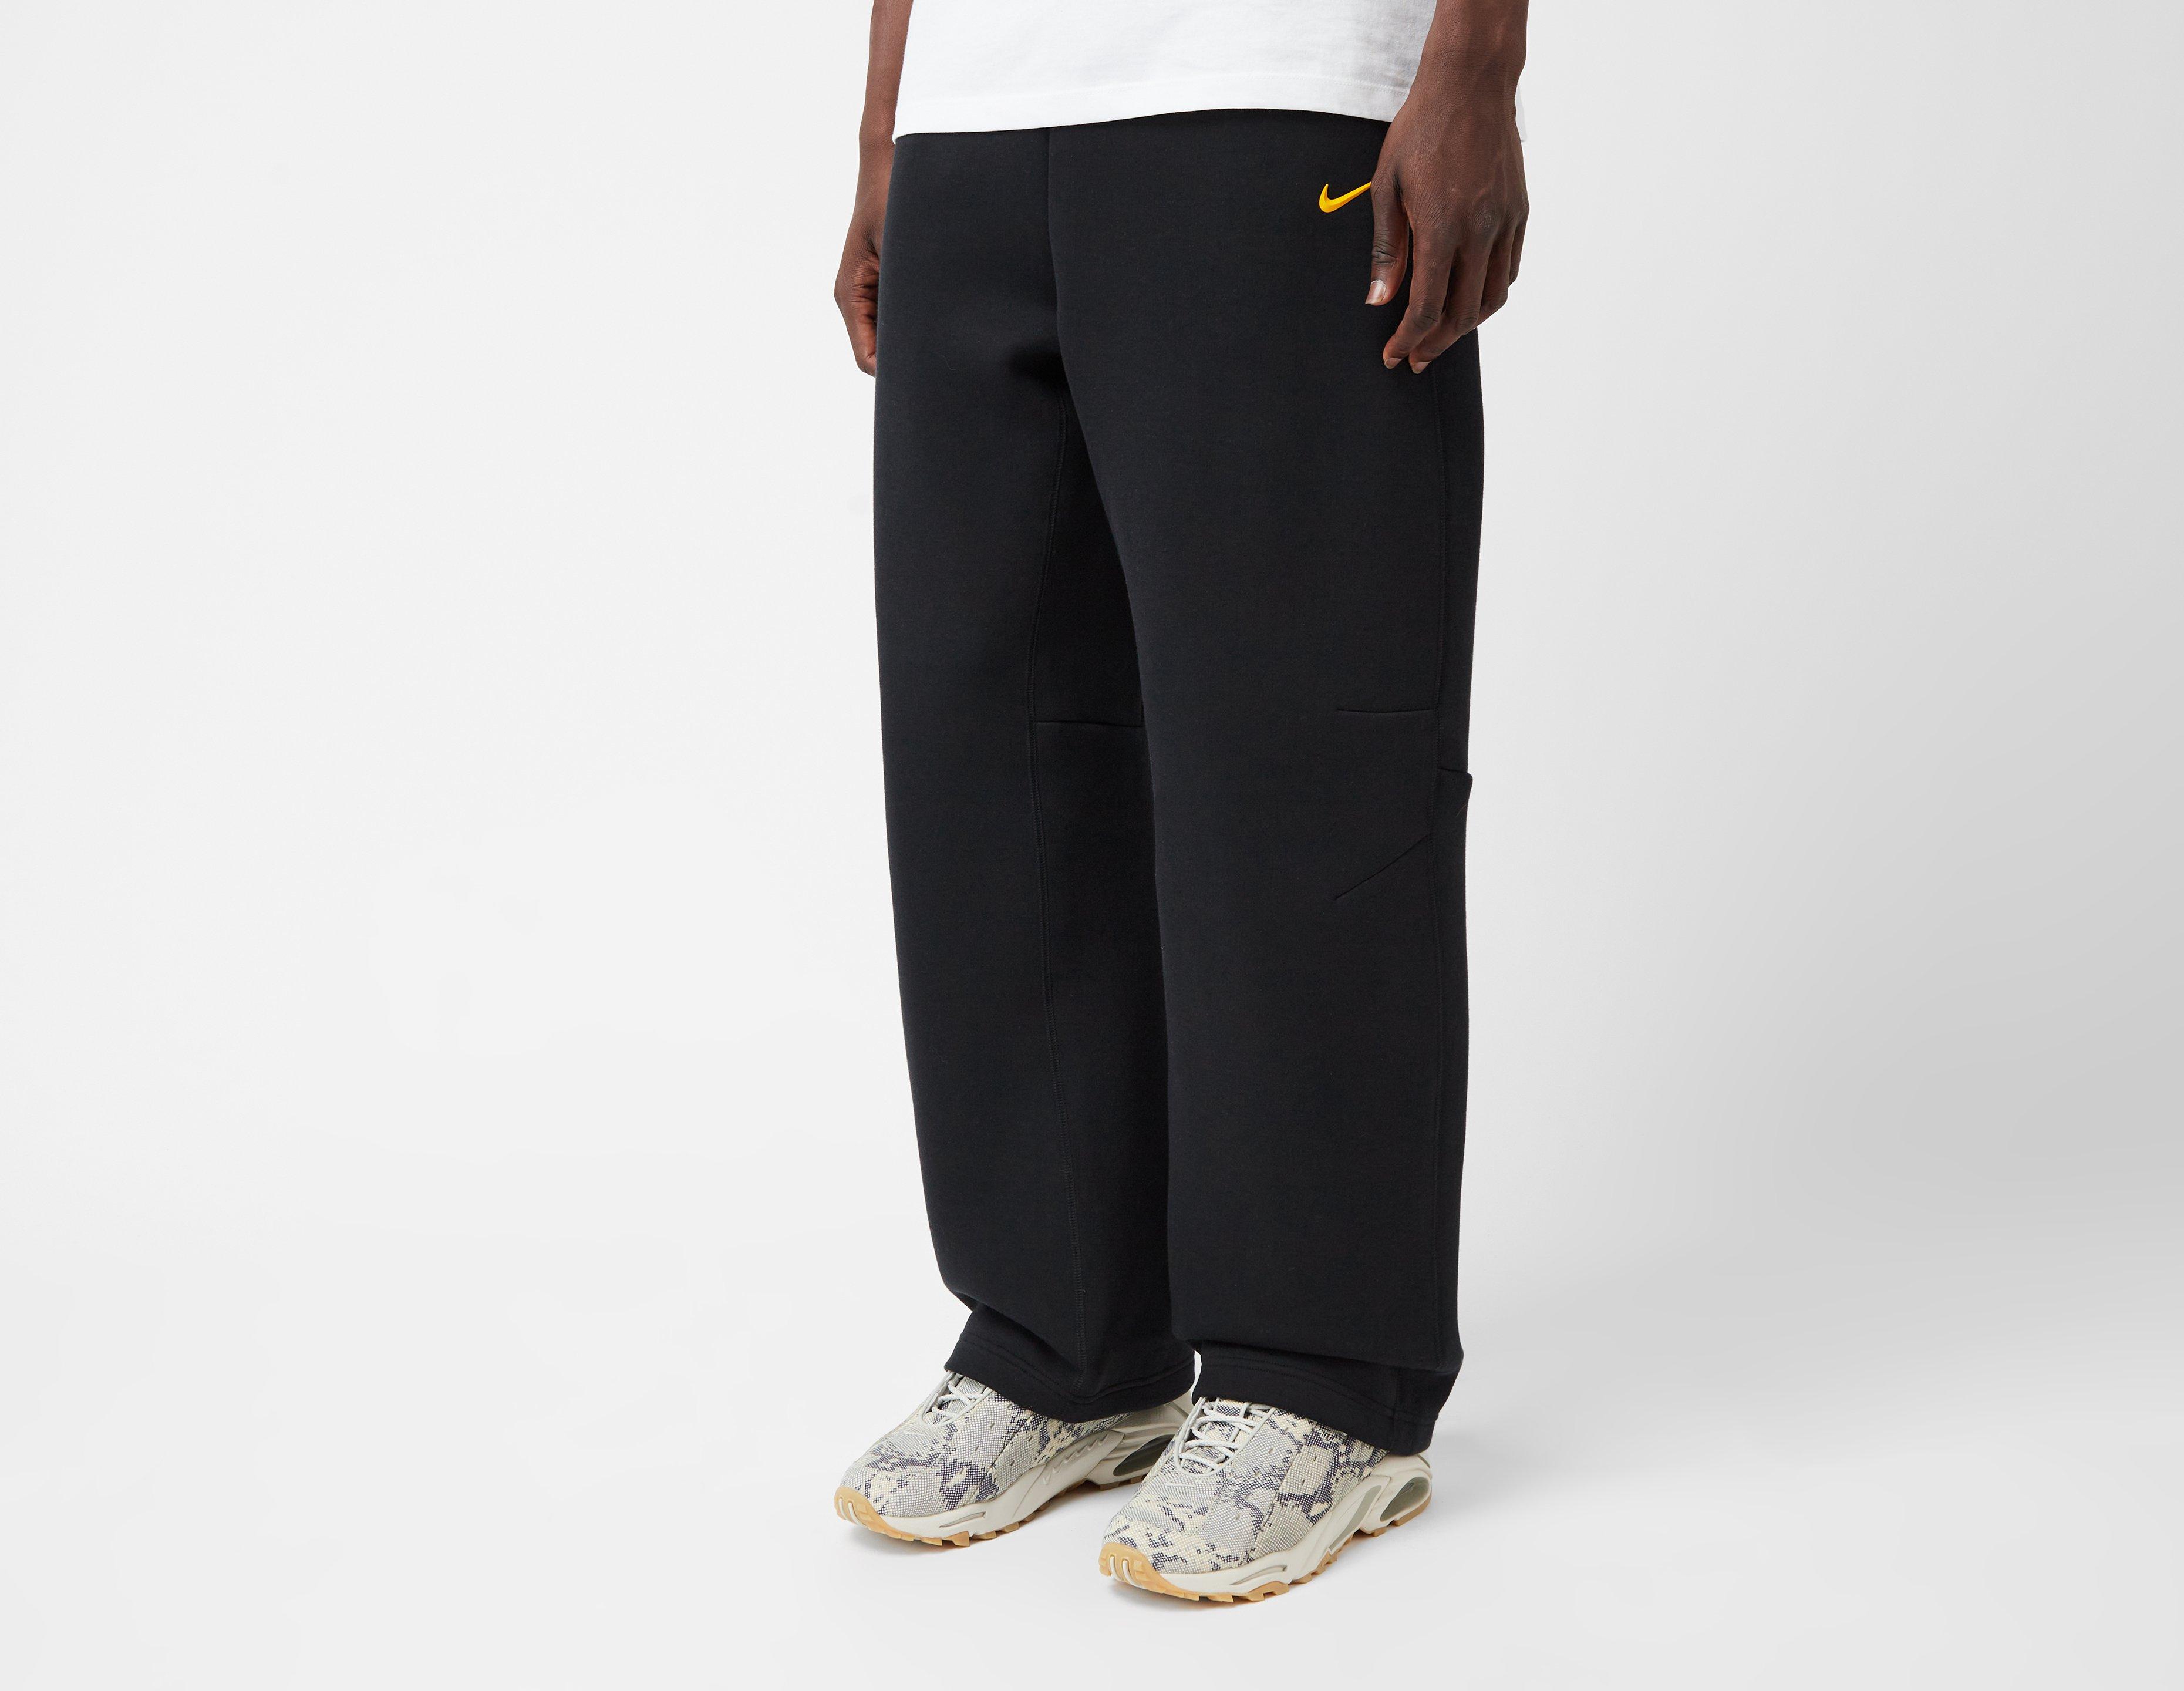 Nike Tech Fleece Pants Review & Sizing 